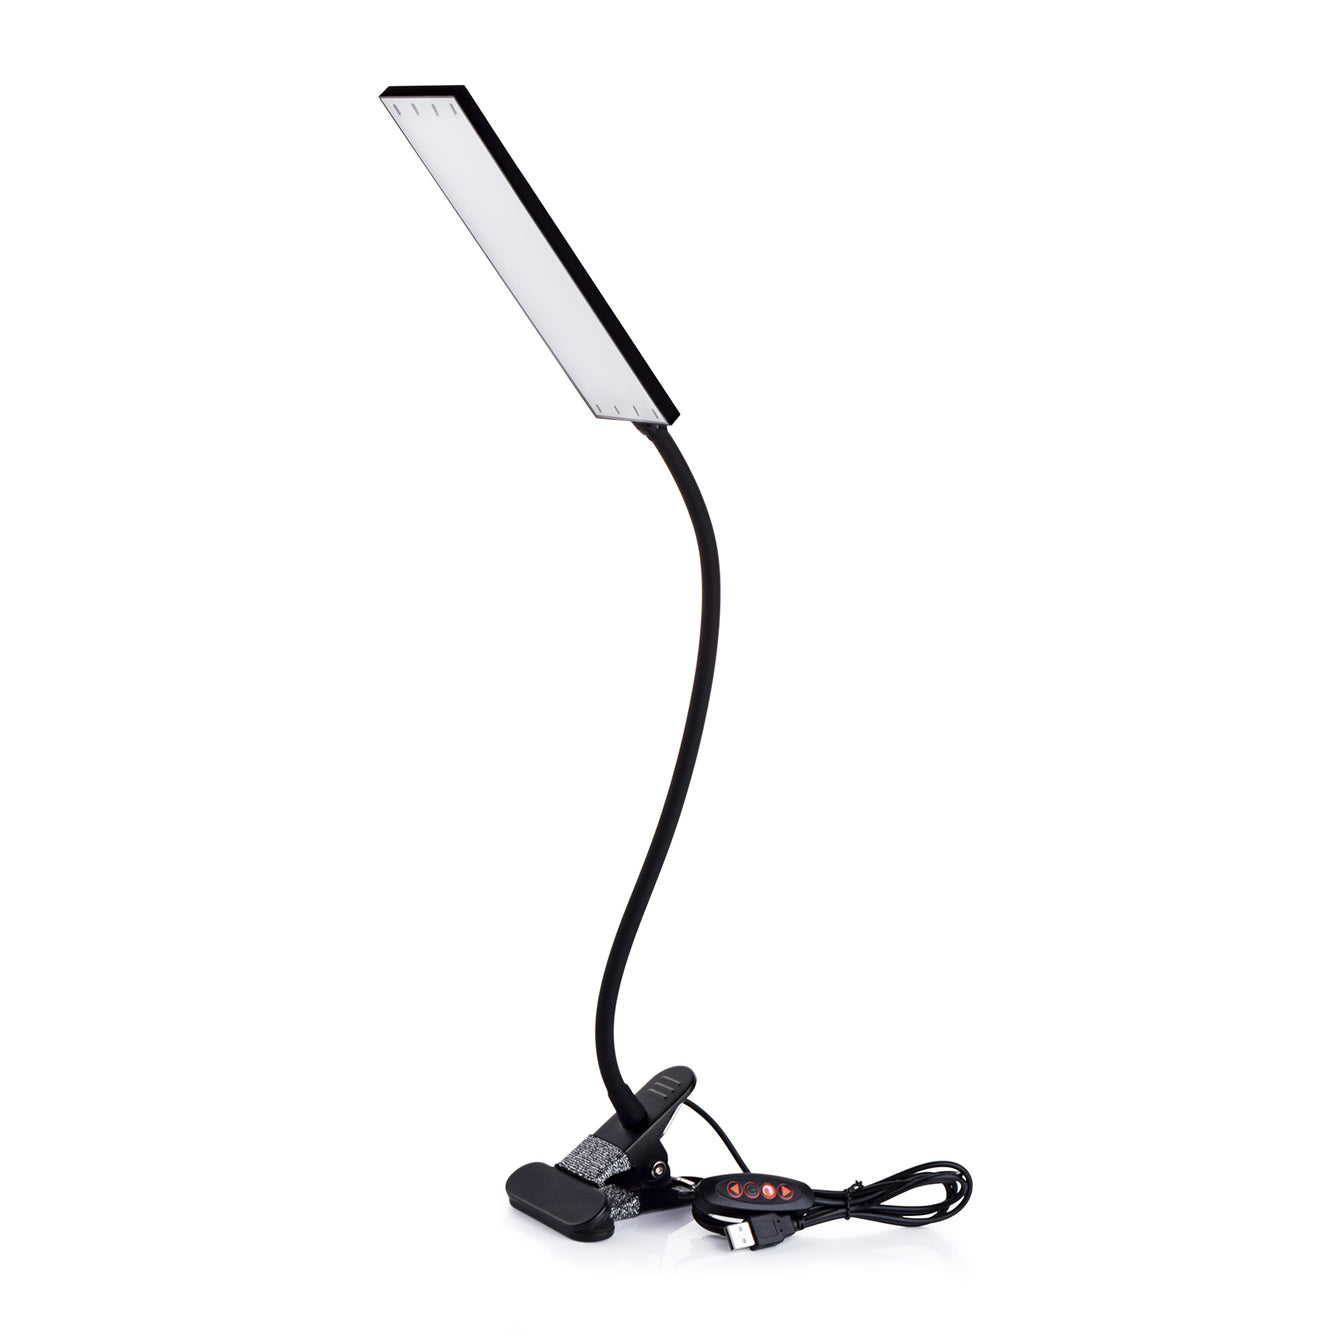 LED Desk Lamp with Clamp, 11 Level Brightness, 3 Color Mode, 360° Adjustable Gooseneck Lamp